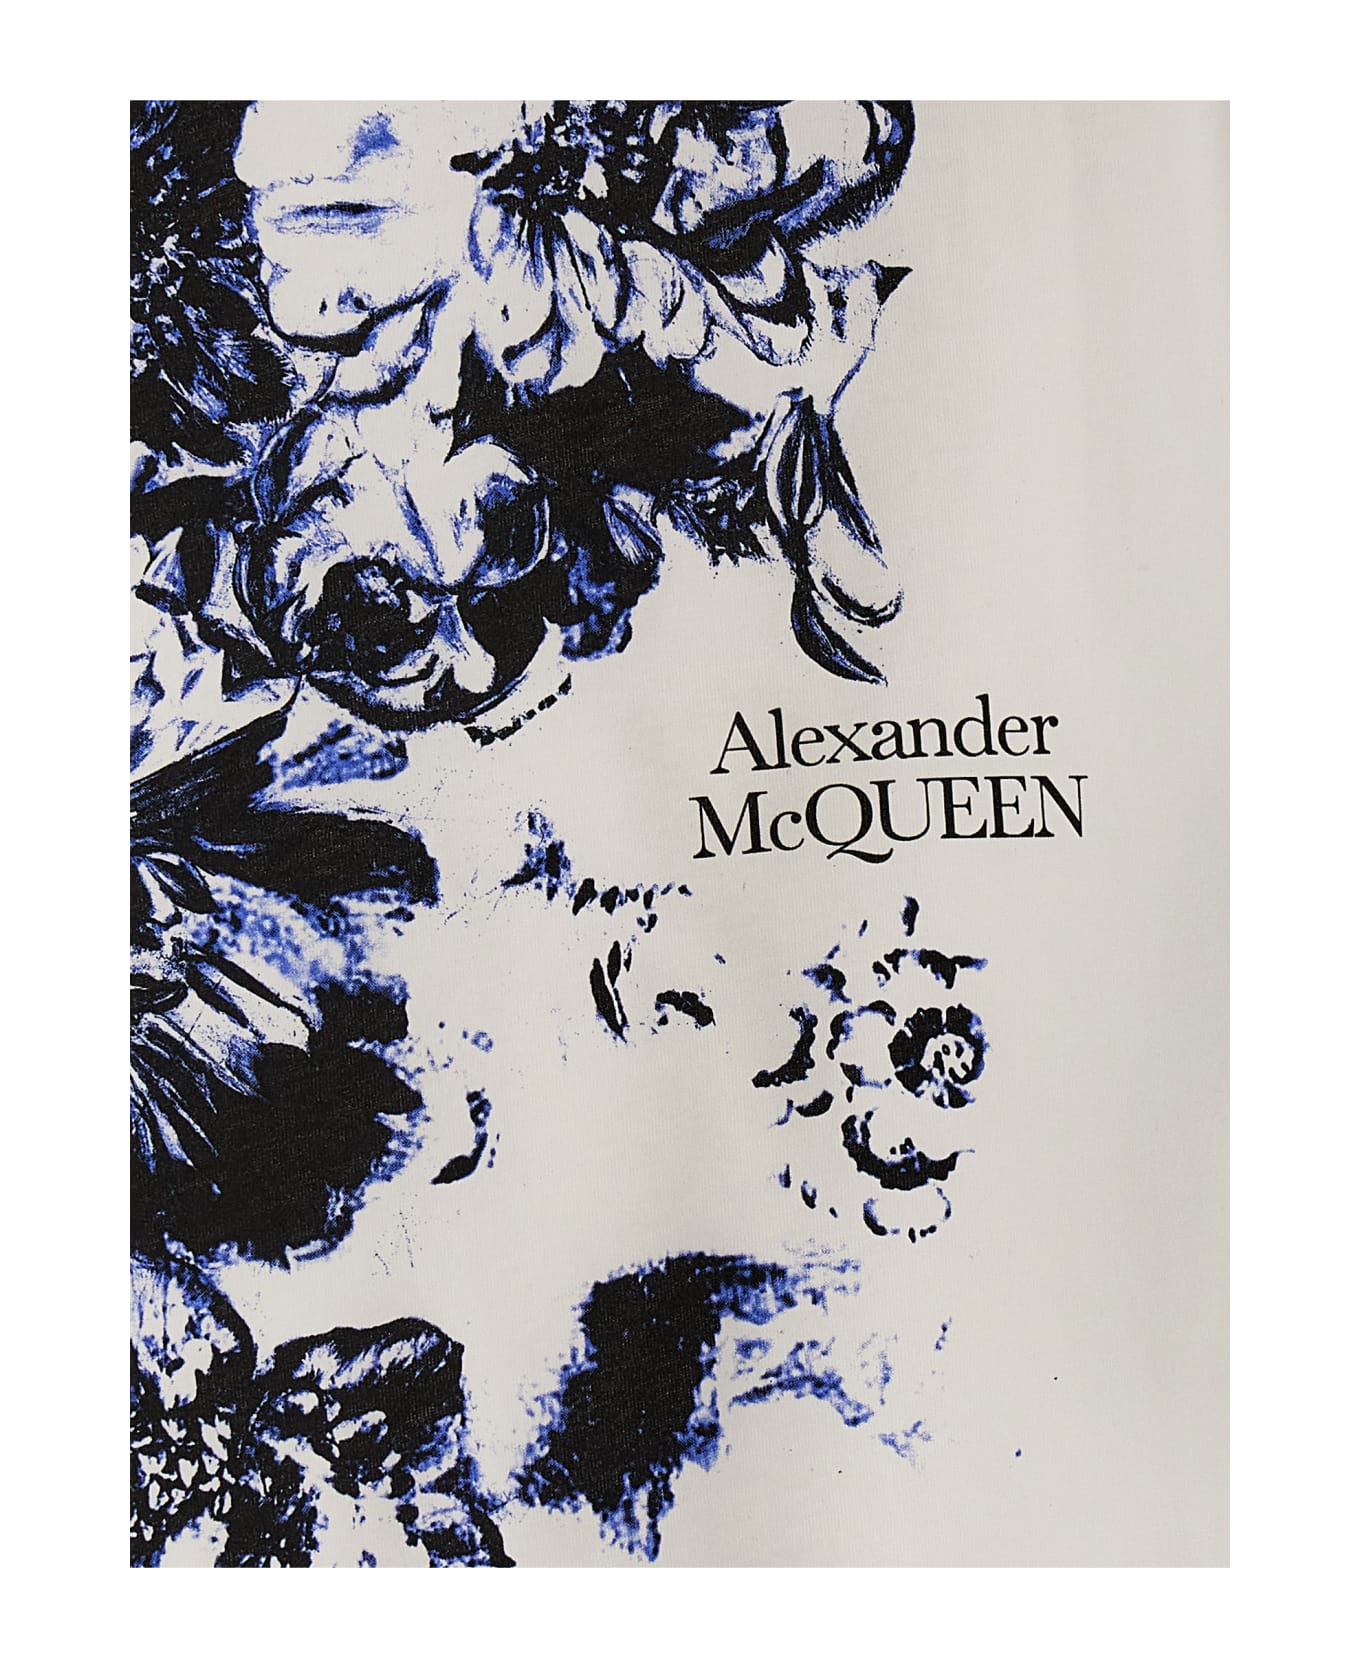 Alexander McQueen Cut And Sew T-shirt - White